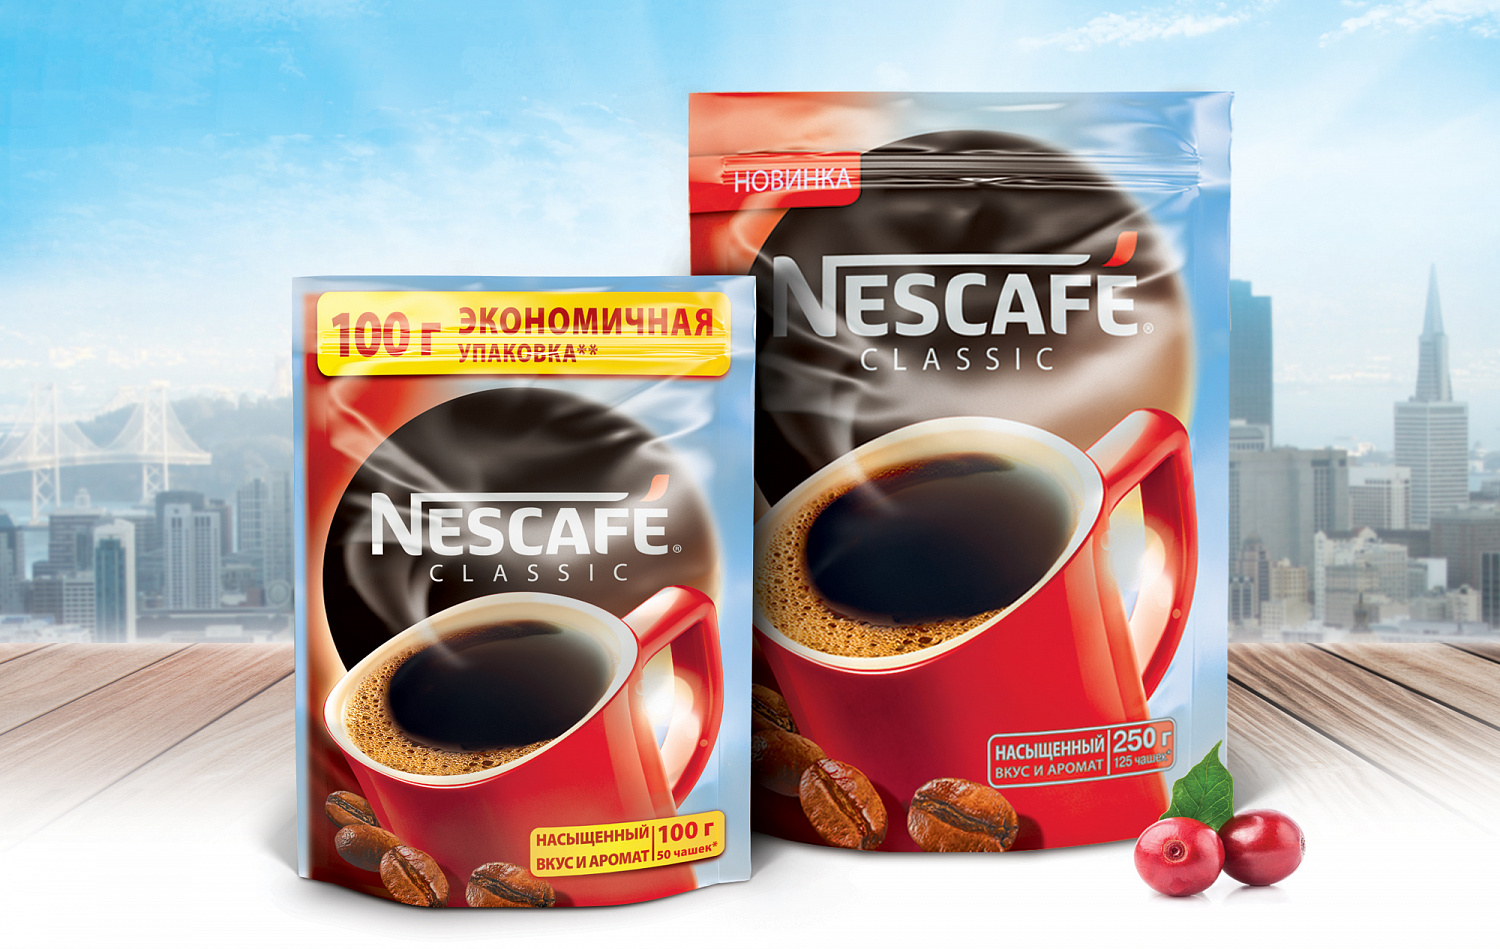 Nescafé Classic - Портфолио Depot